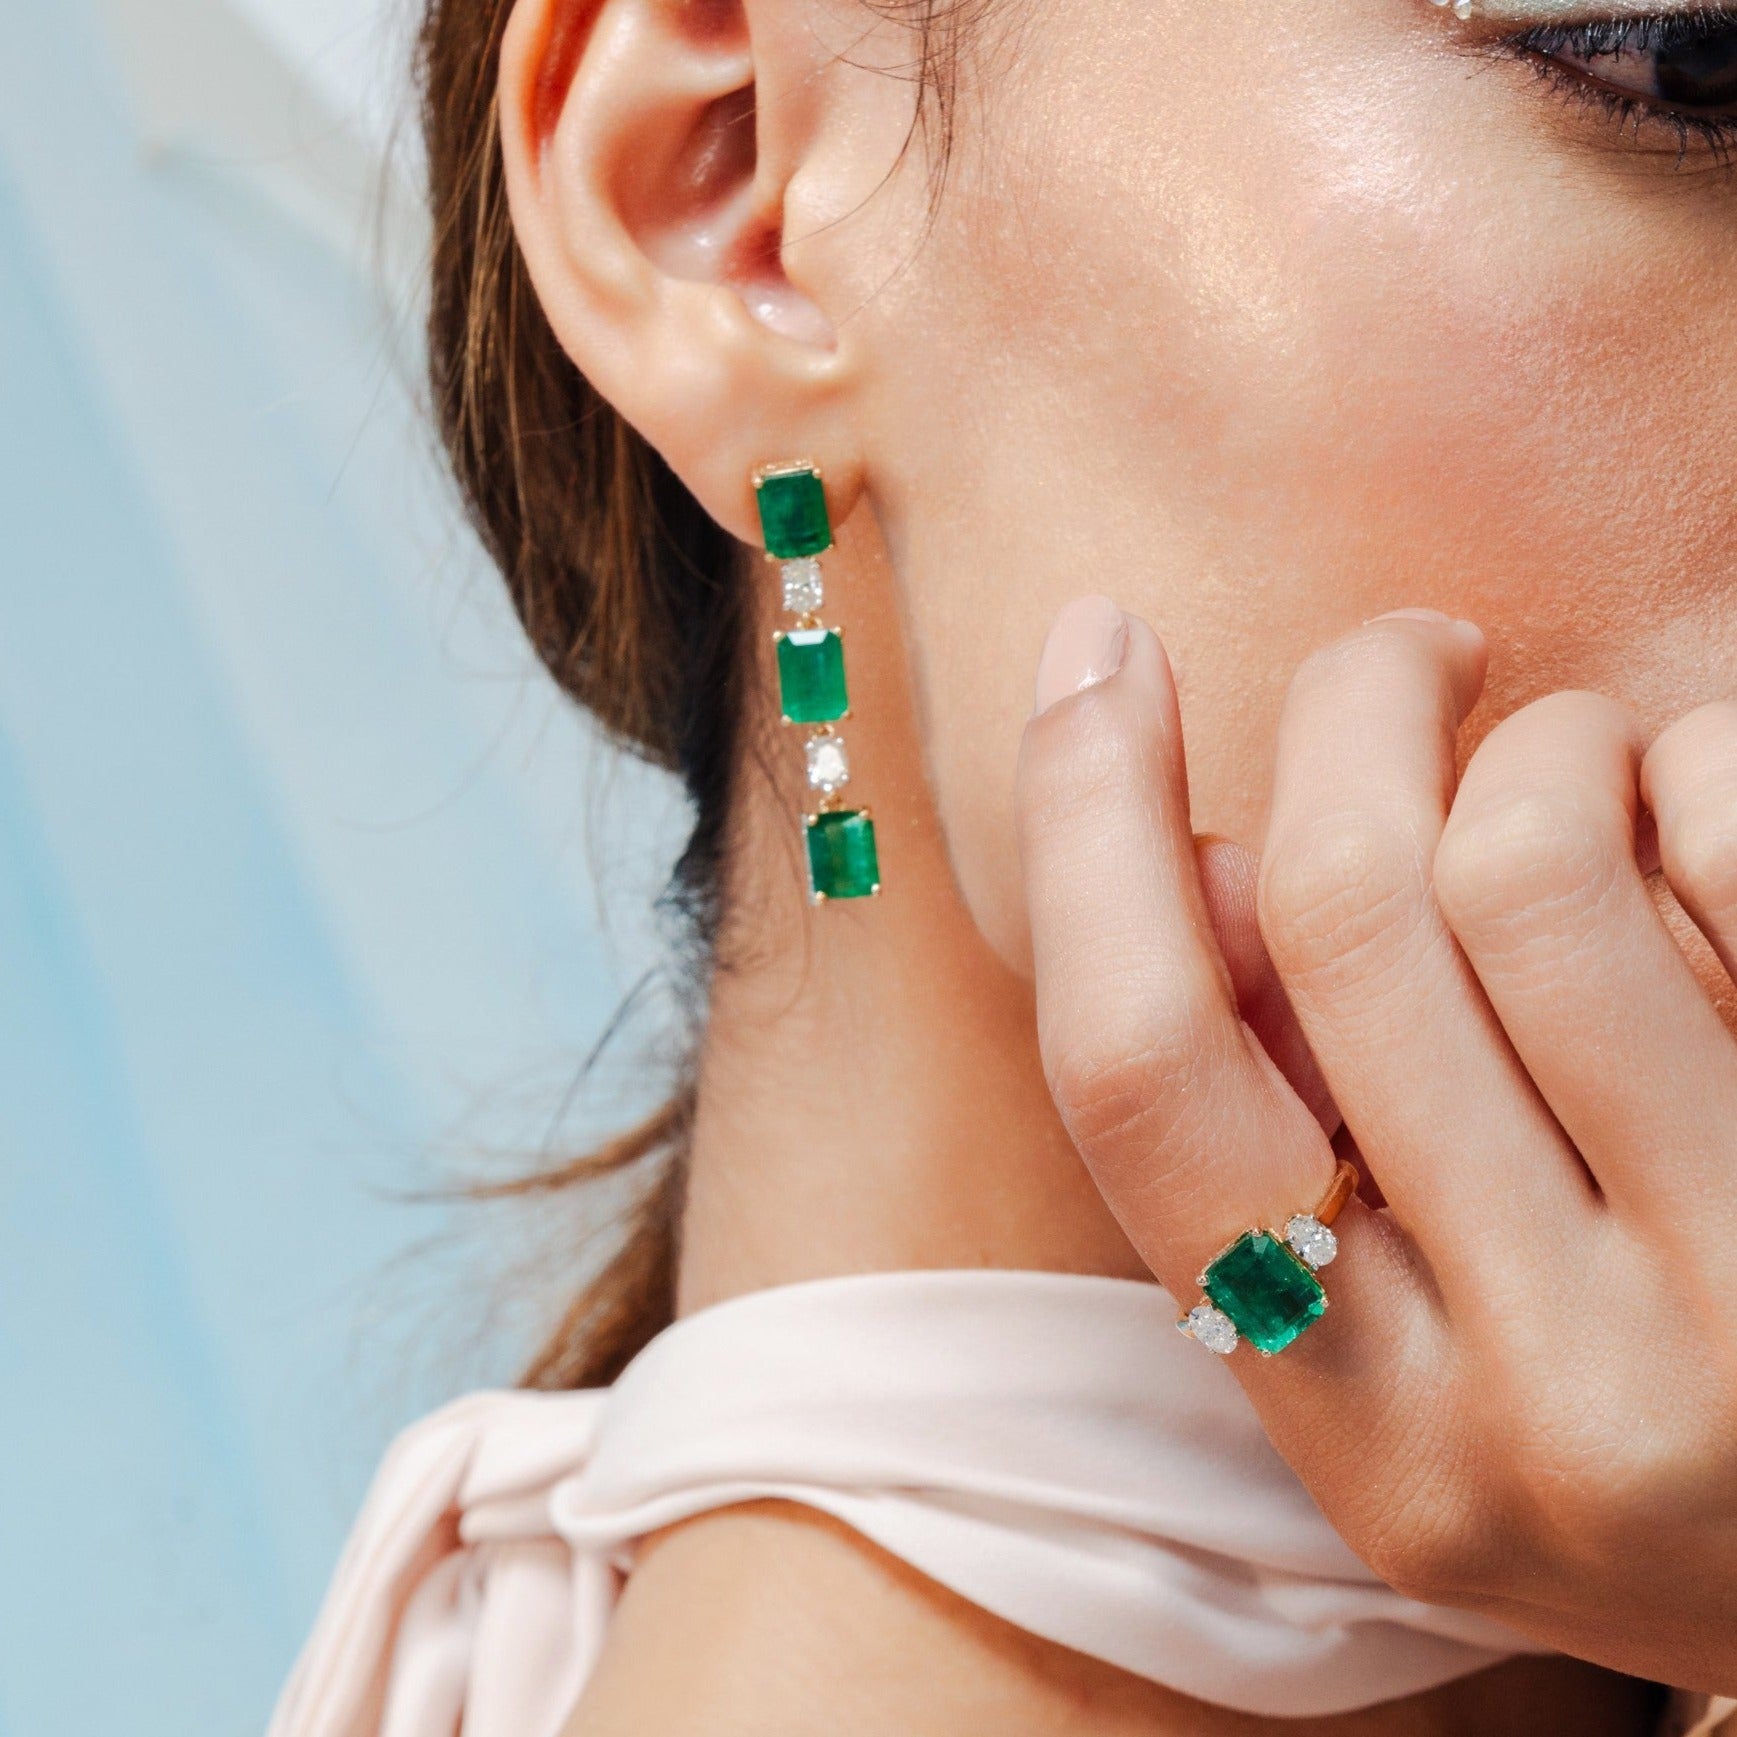 18K Gold Octagon Cut Emerald Diamond Drop Earrings